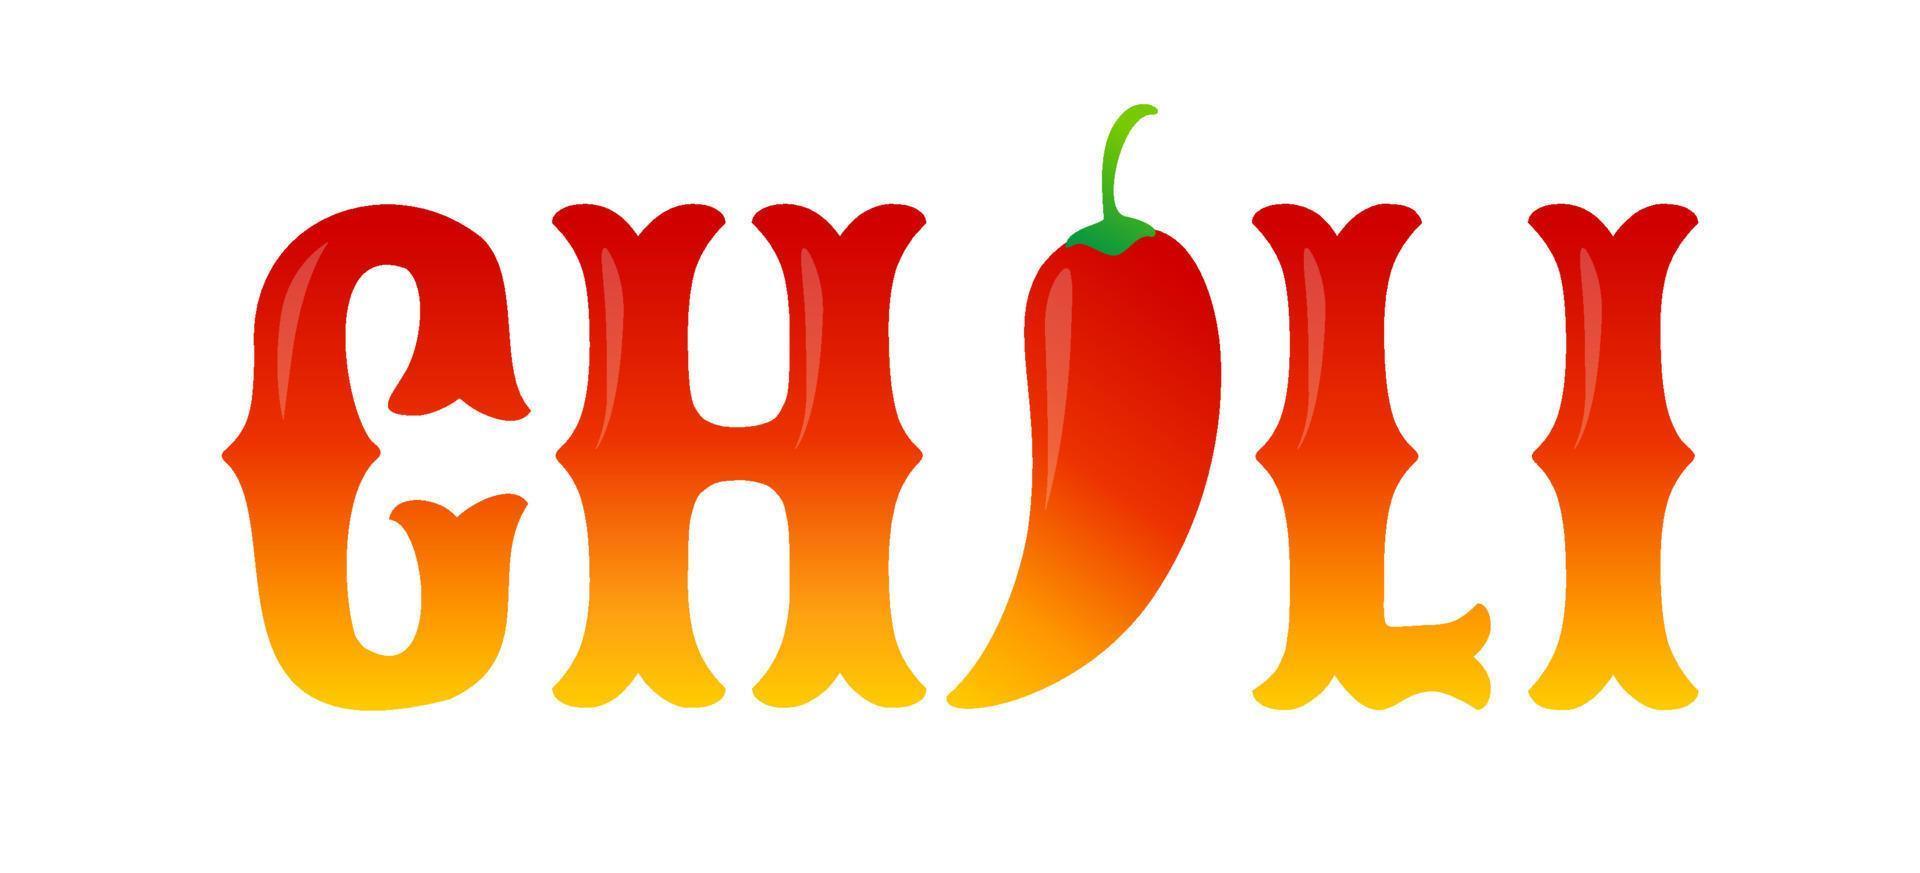 vector typografie met rood chili peper. pittig voedsel